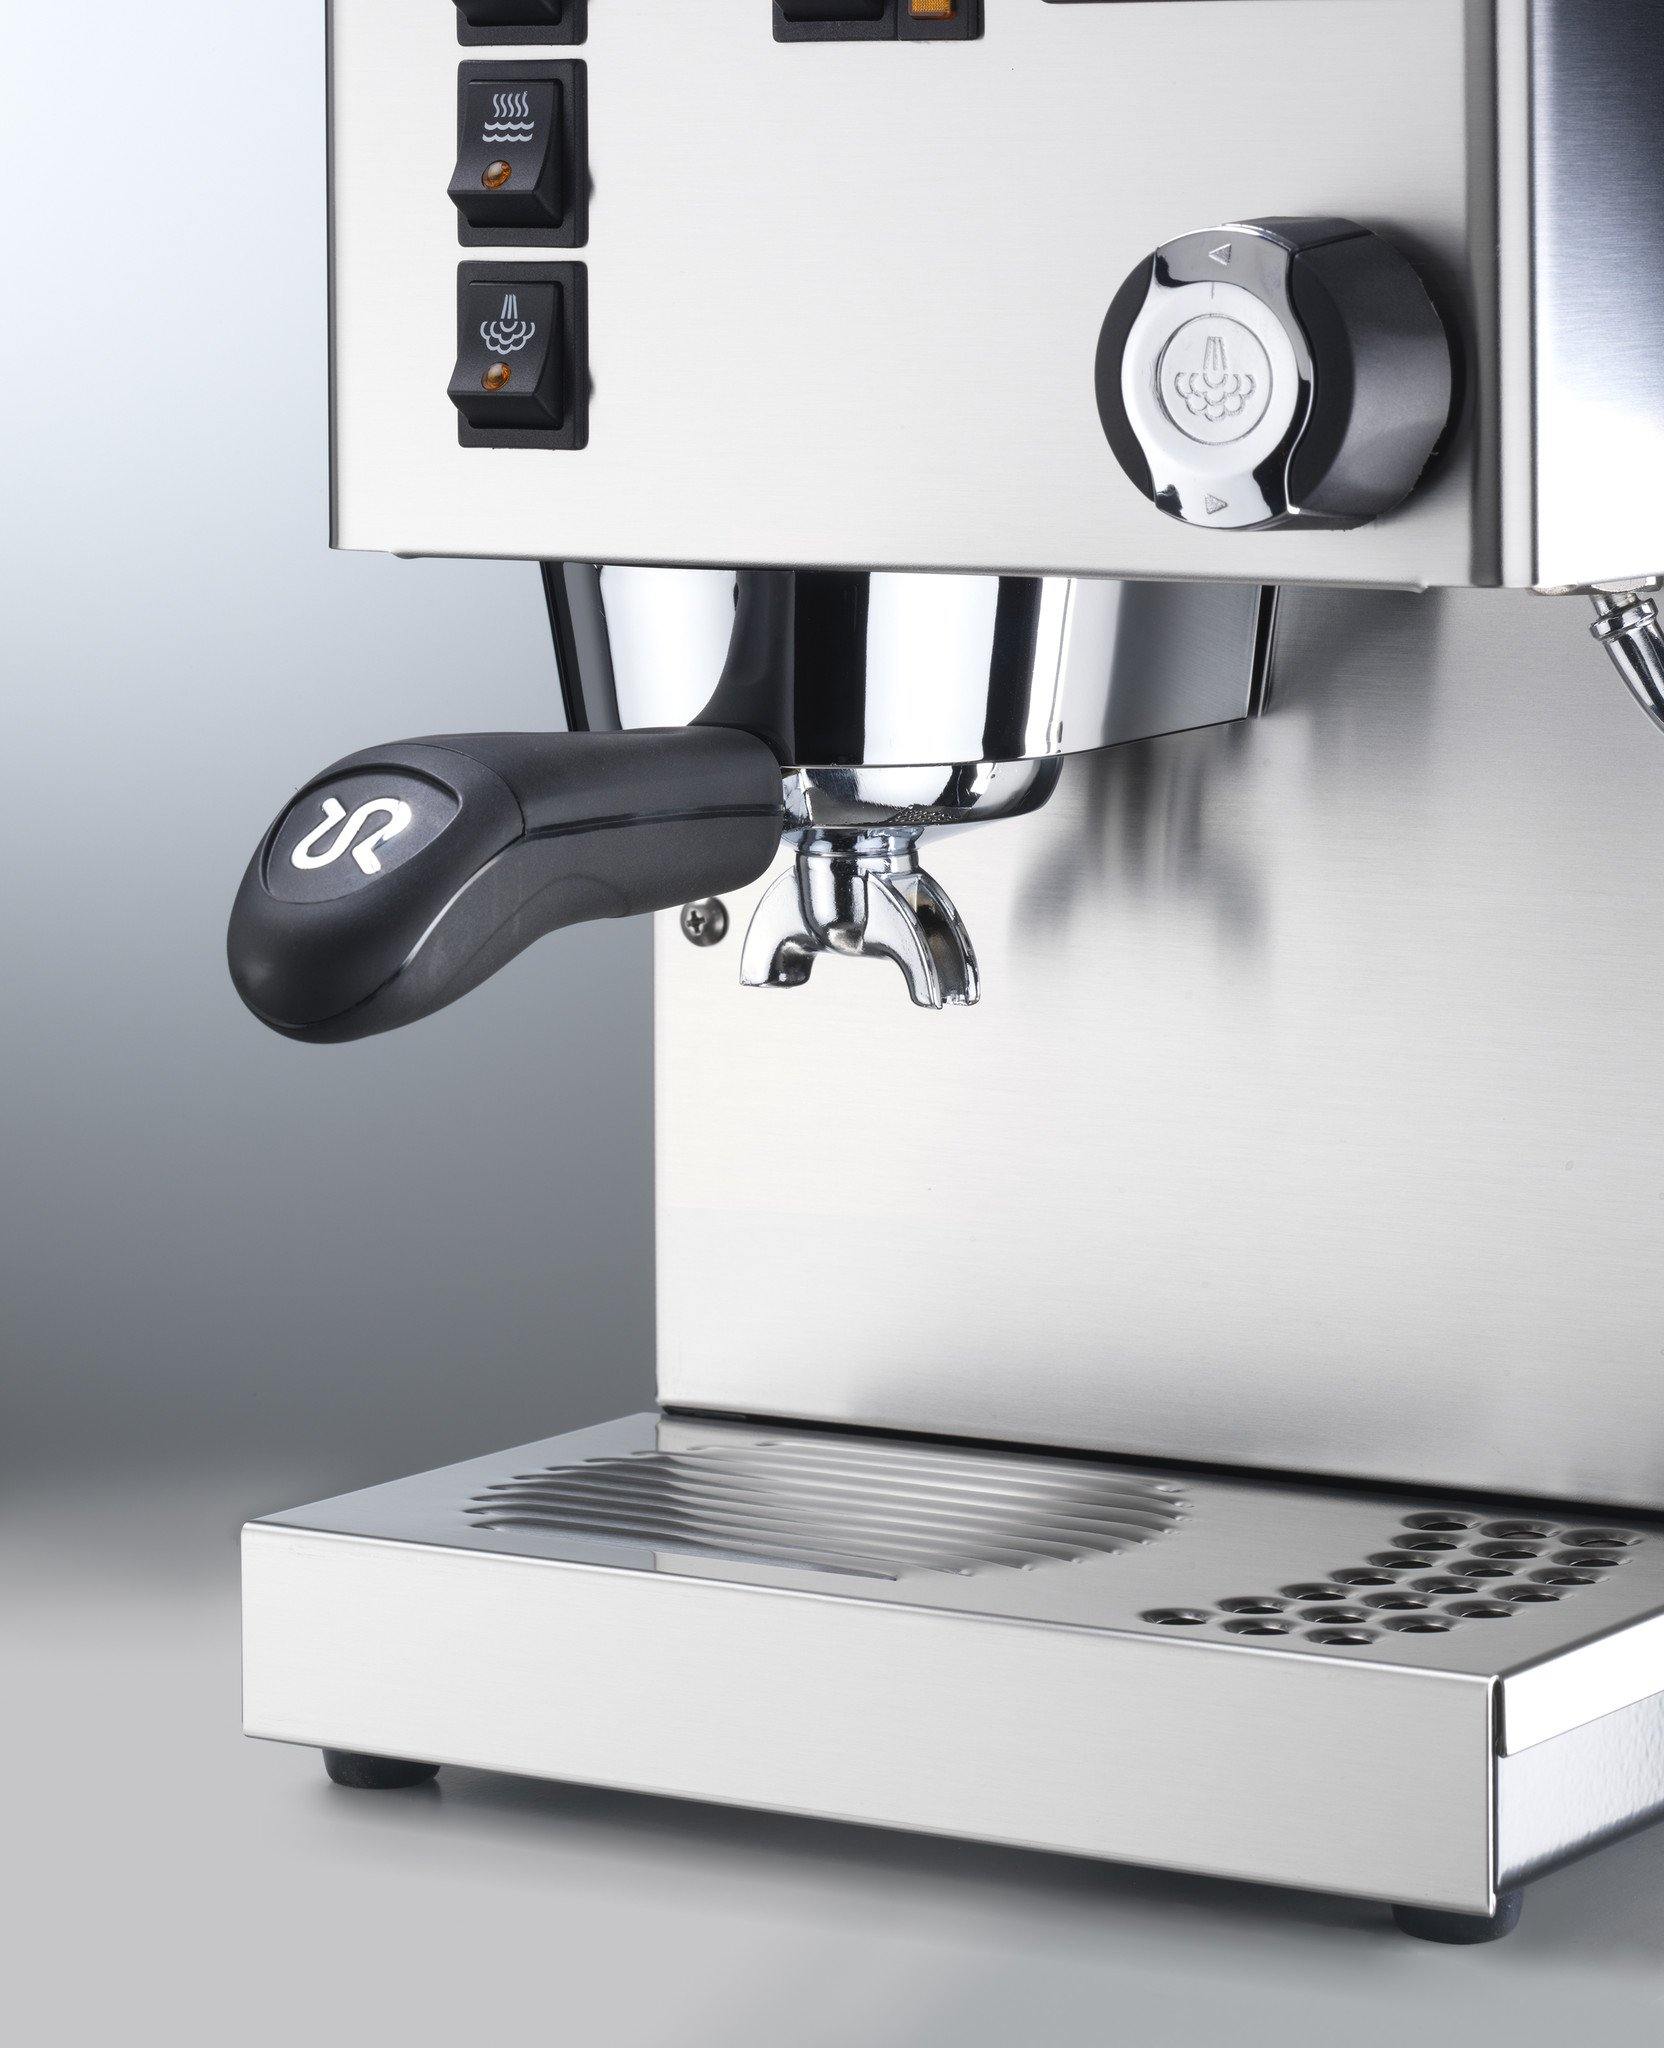 Rancilio Silvia Parts - Home Coffee Machines Ltd